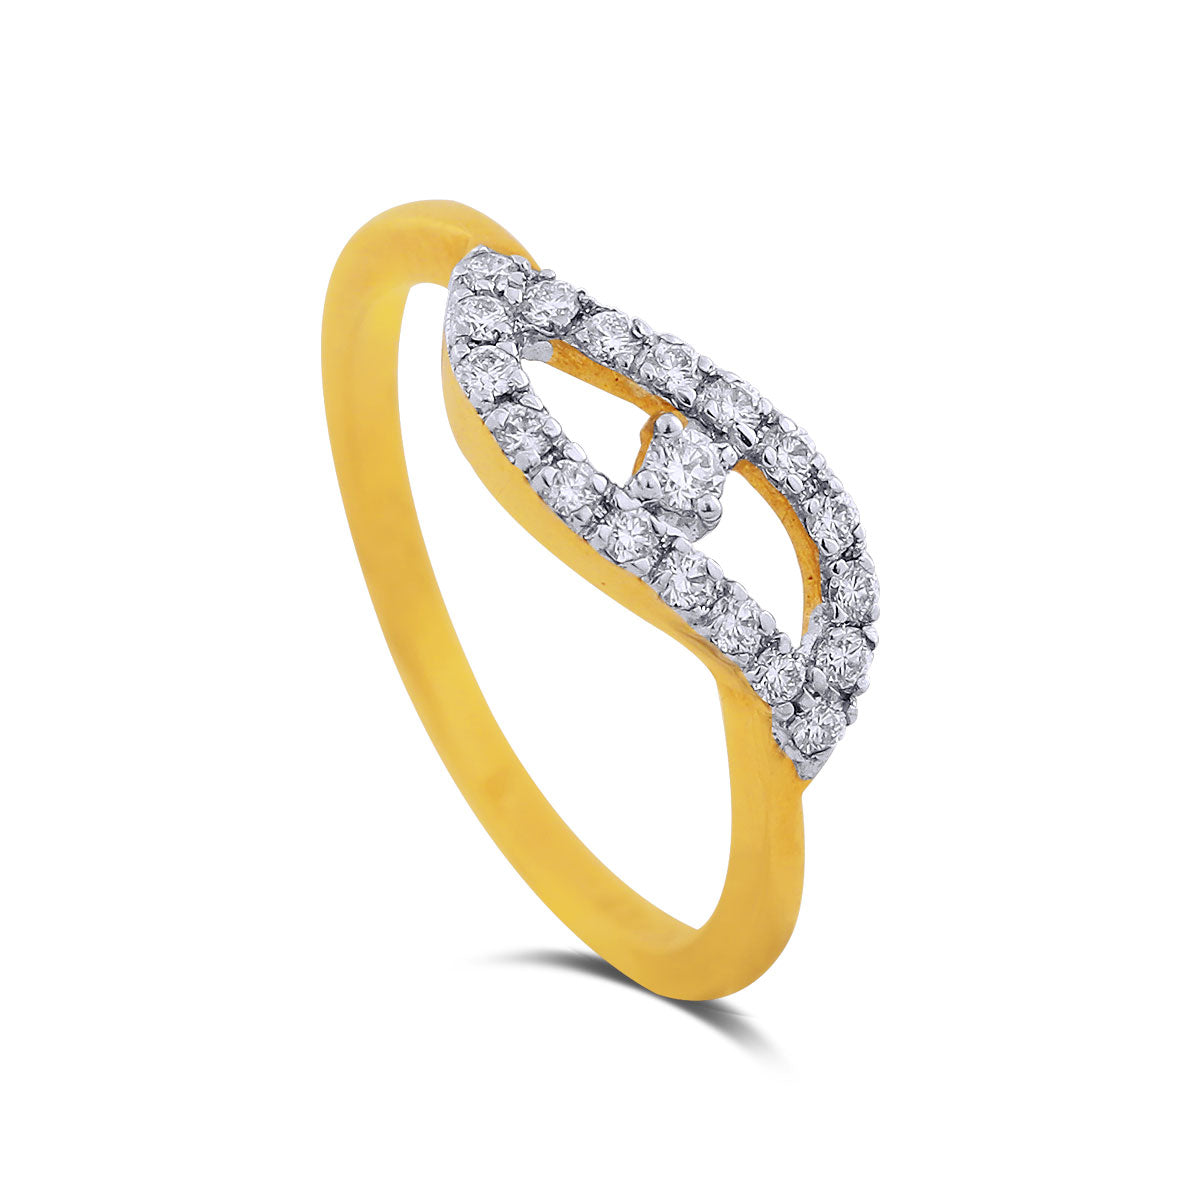 How To Buy Engagement Ring: 10 Tips For Men & Women